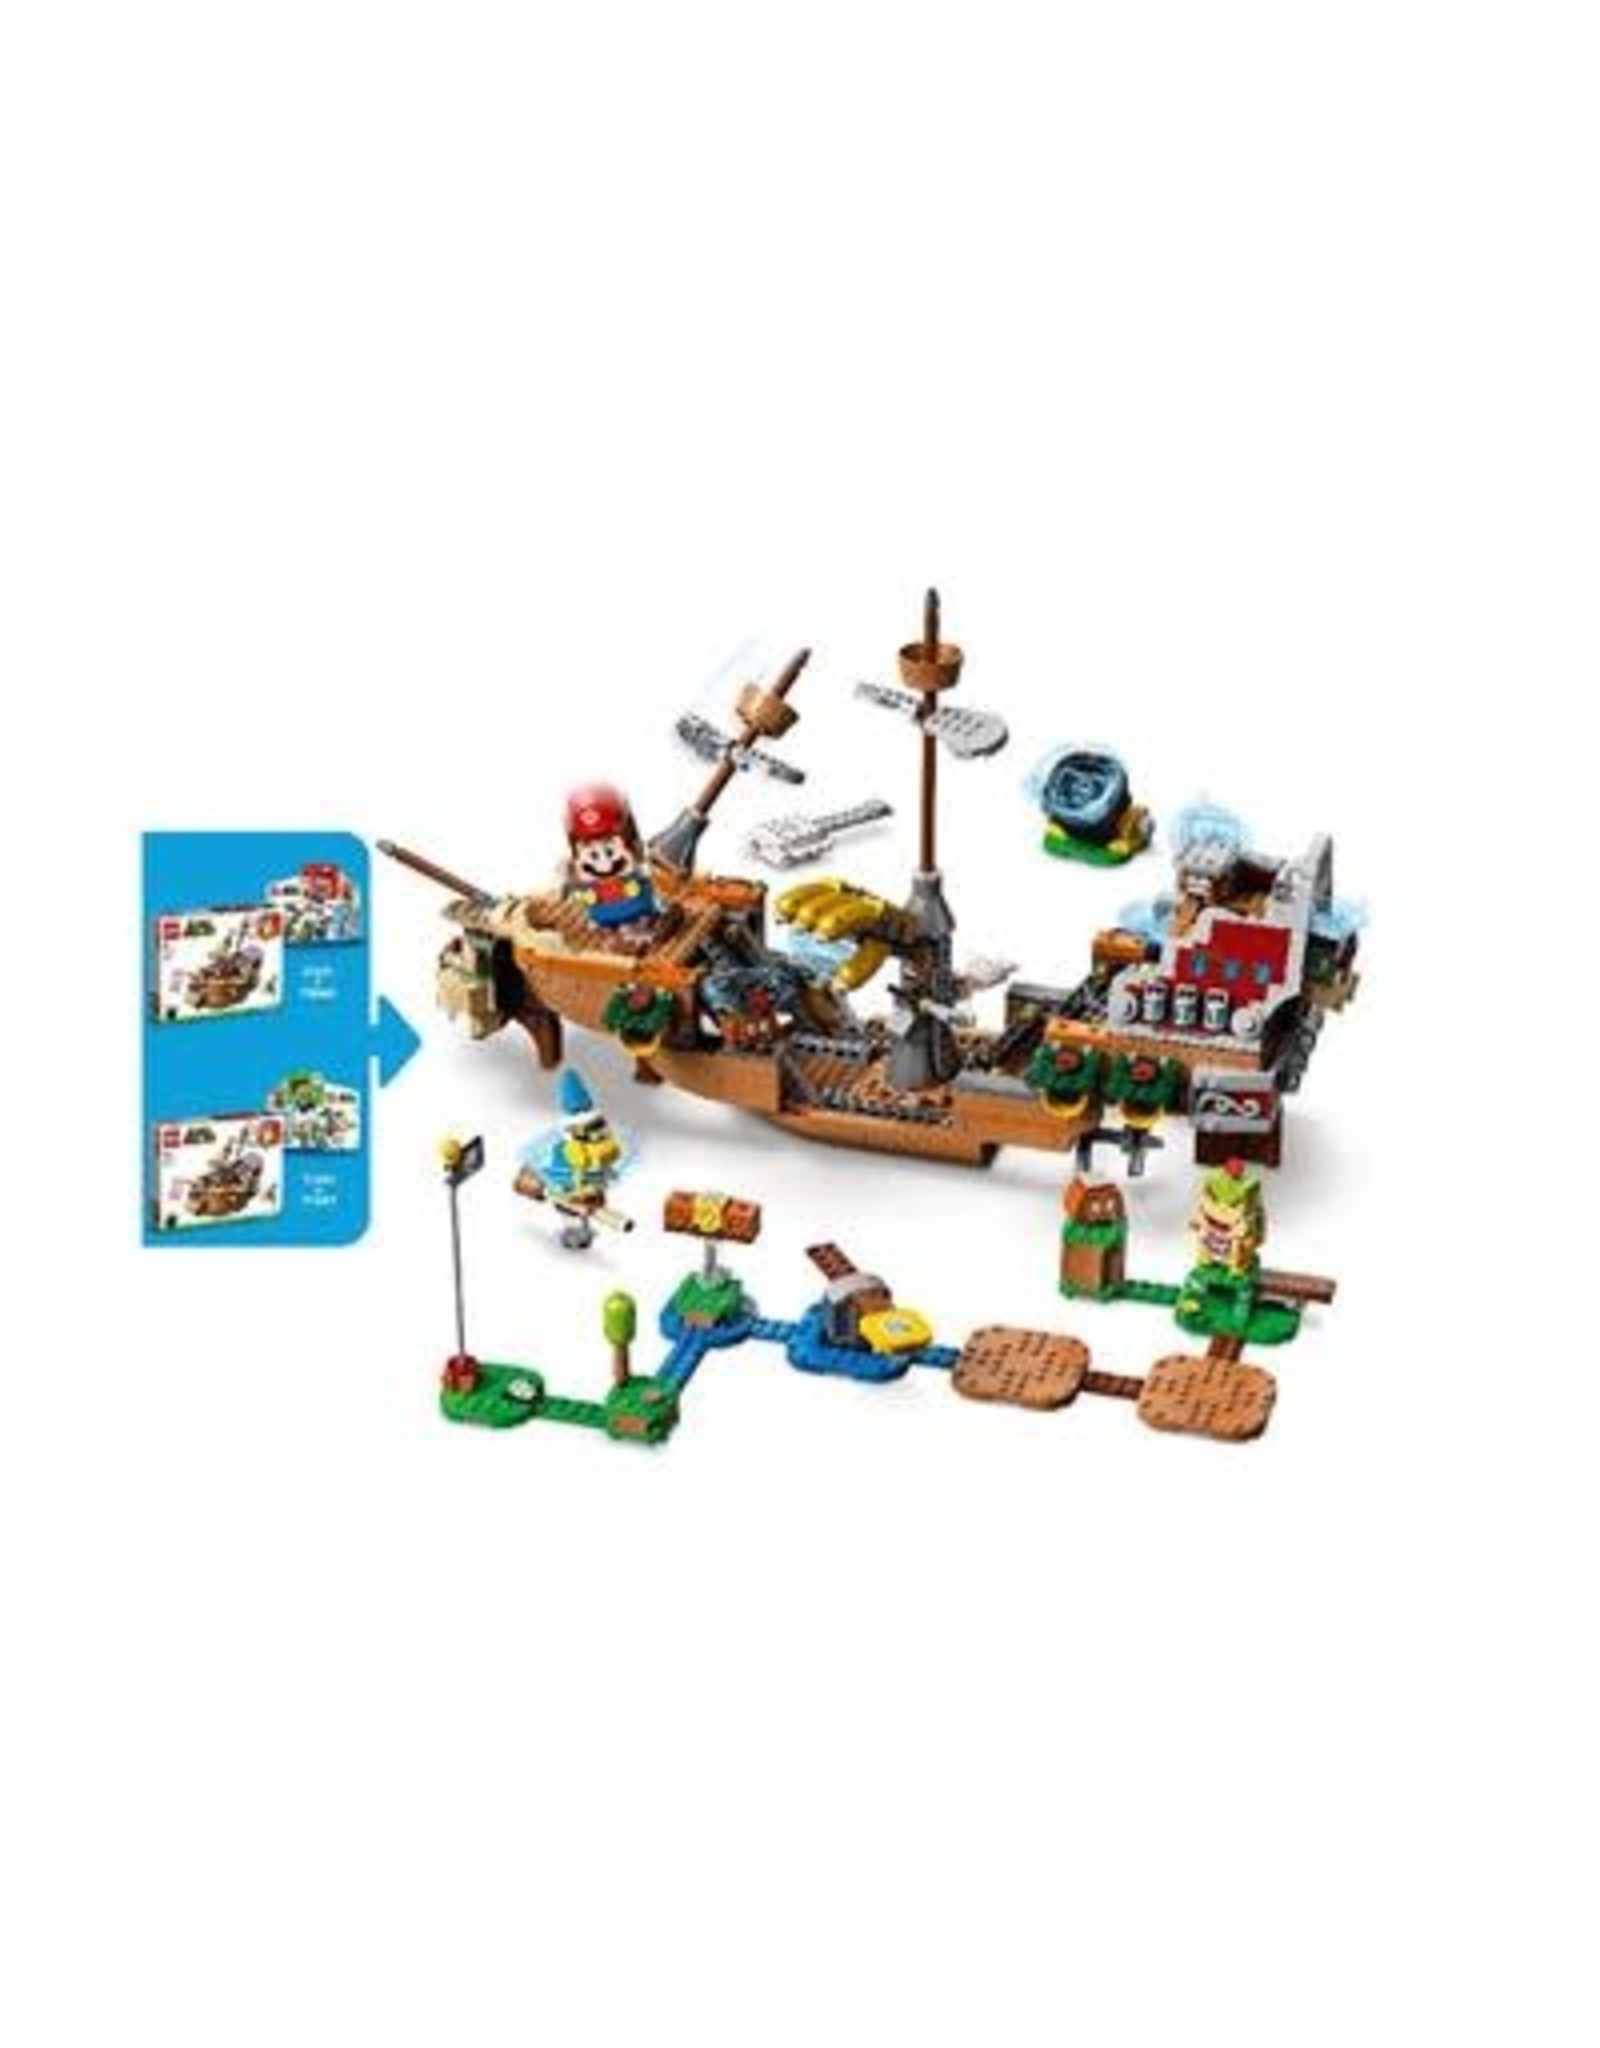 LEGO Lego Super mario 71391 Uitbreidingsset: Bowsers luchtschip